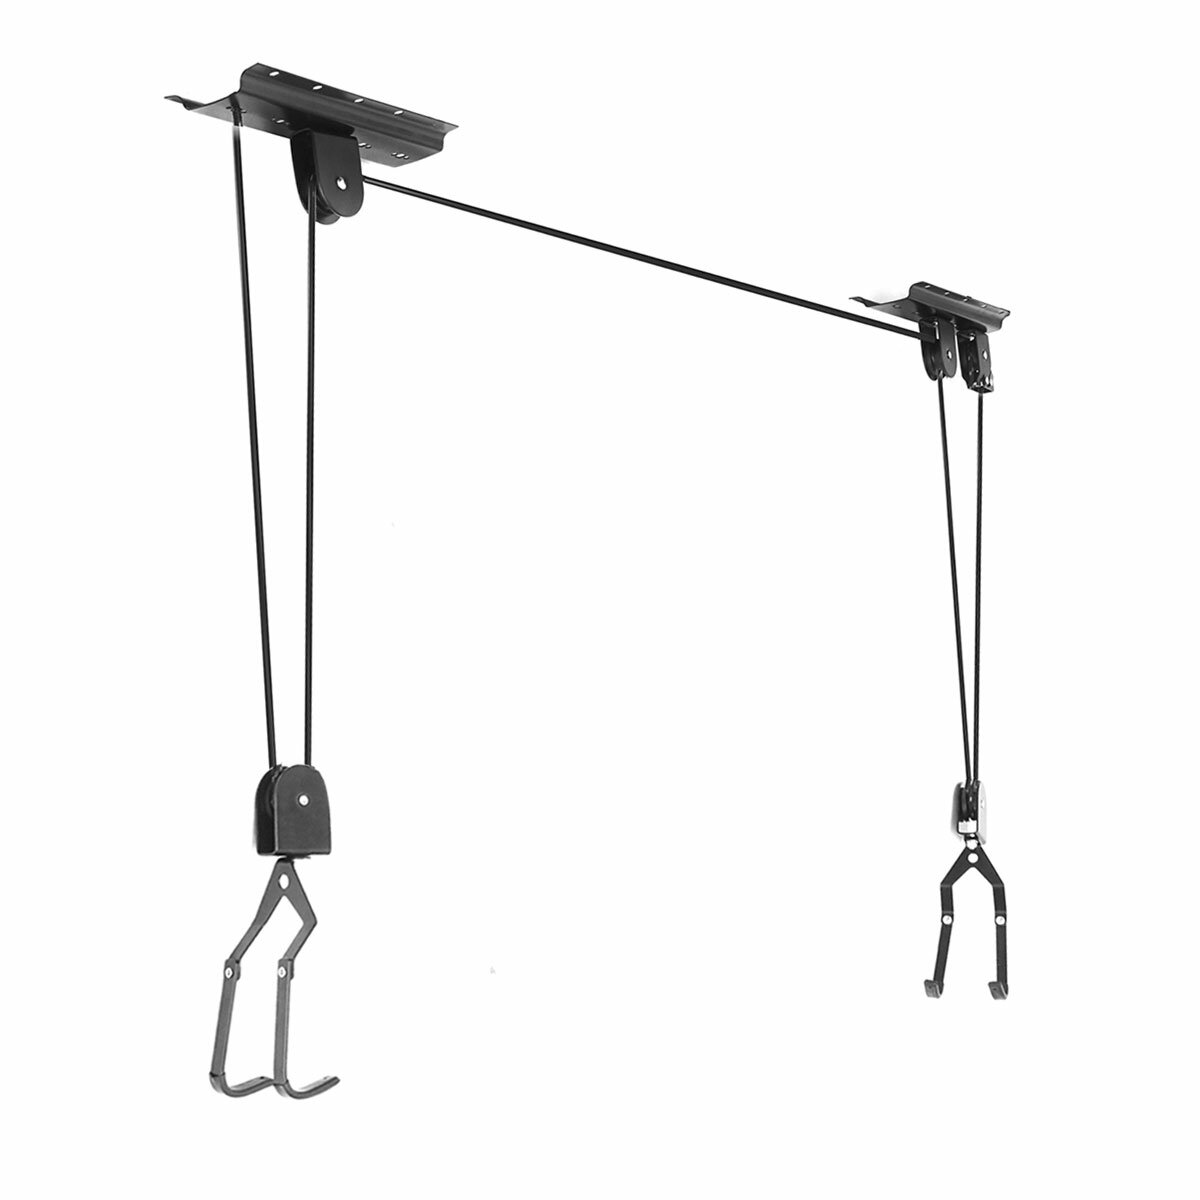 25/50/60kg Hanger Hoist Lift Pulley System Crane for Bicycle/Rubber Boat/Kayak/Surfboard/Canoe